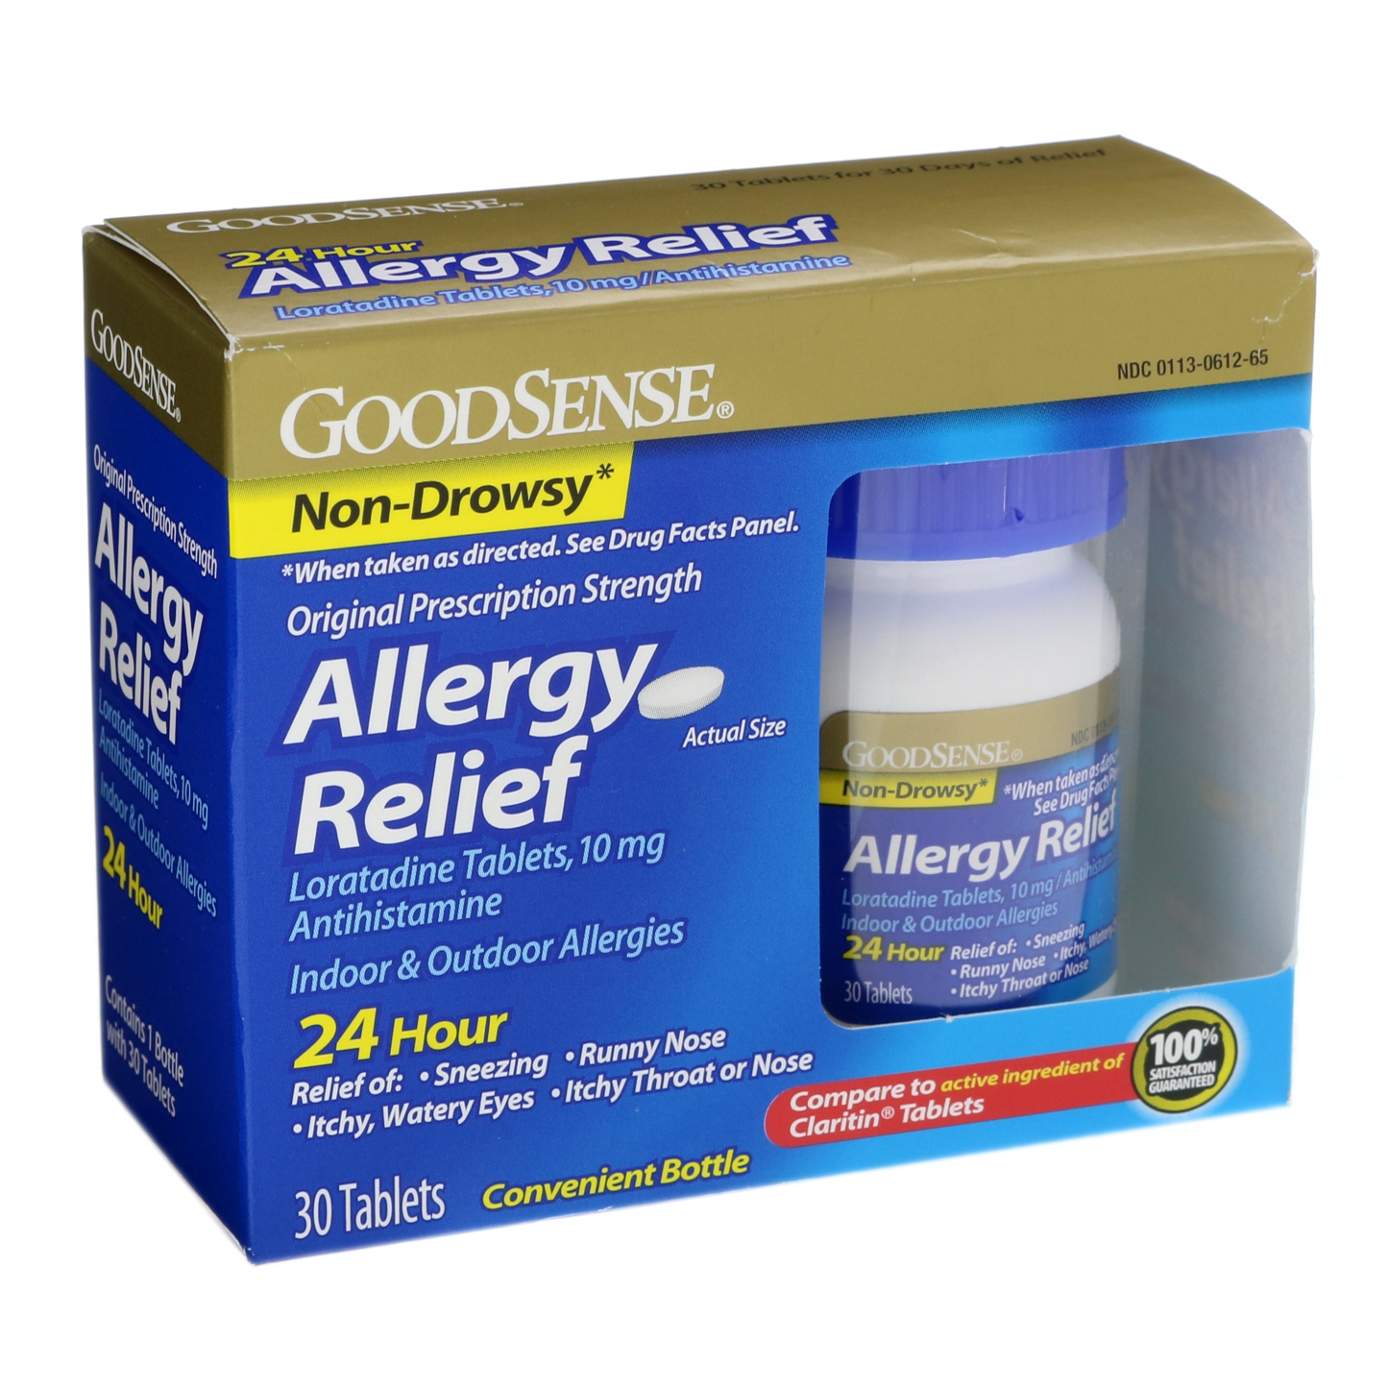 Good Sense Allergy Relief Loratadine 10mg Tablets; image 1 of 2